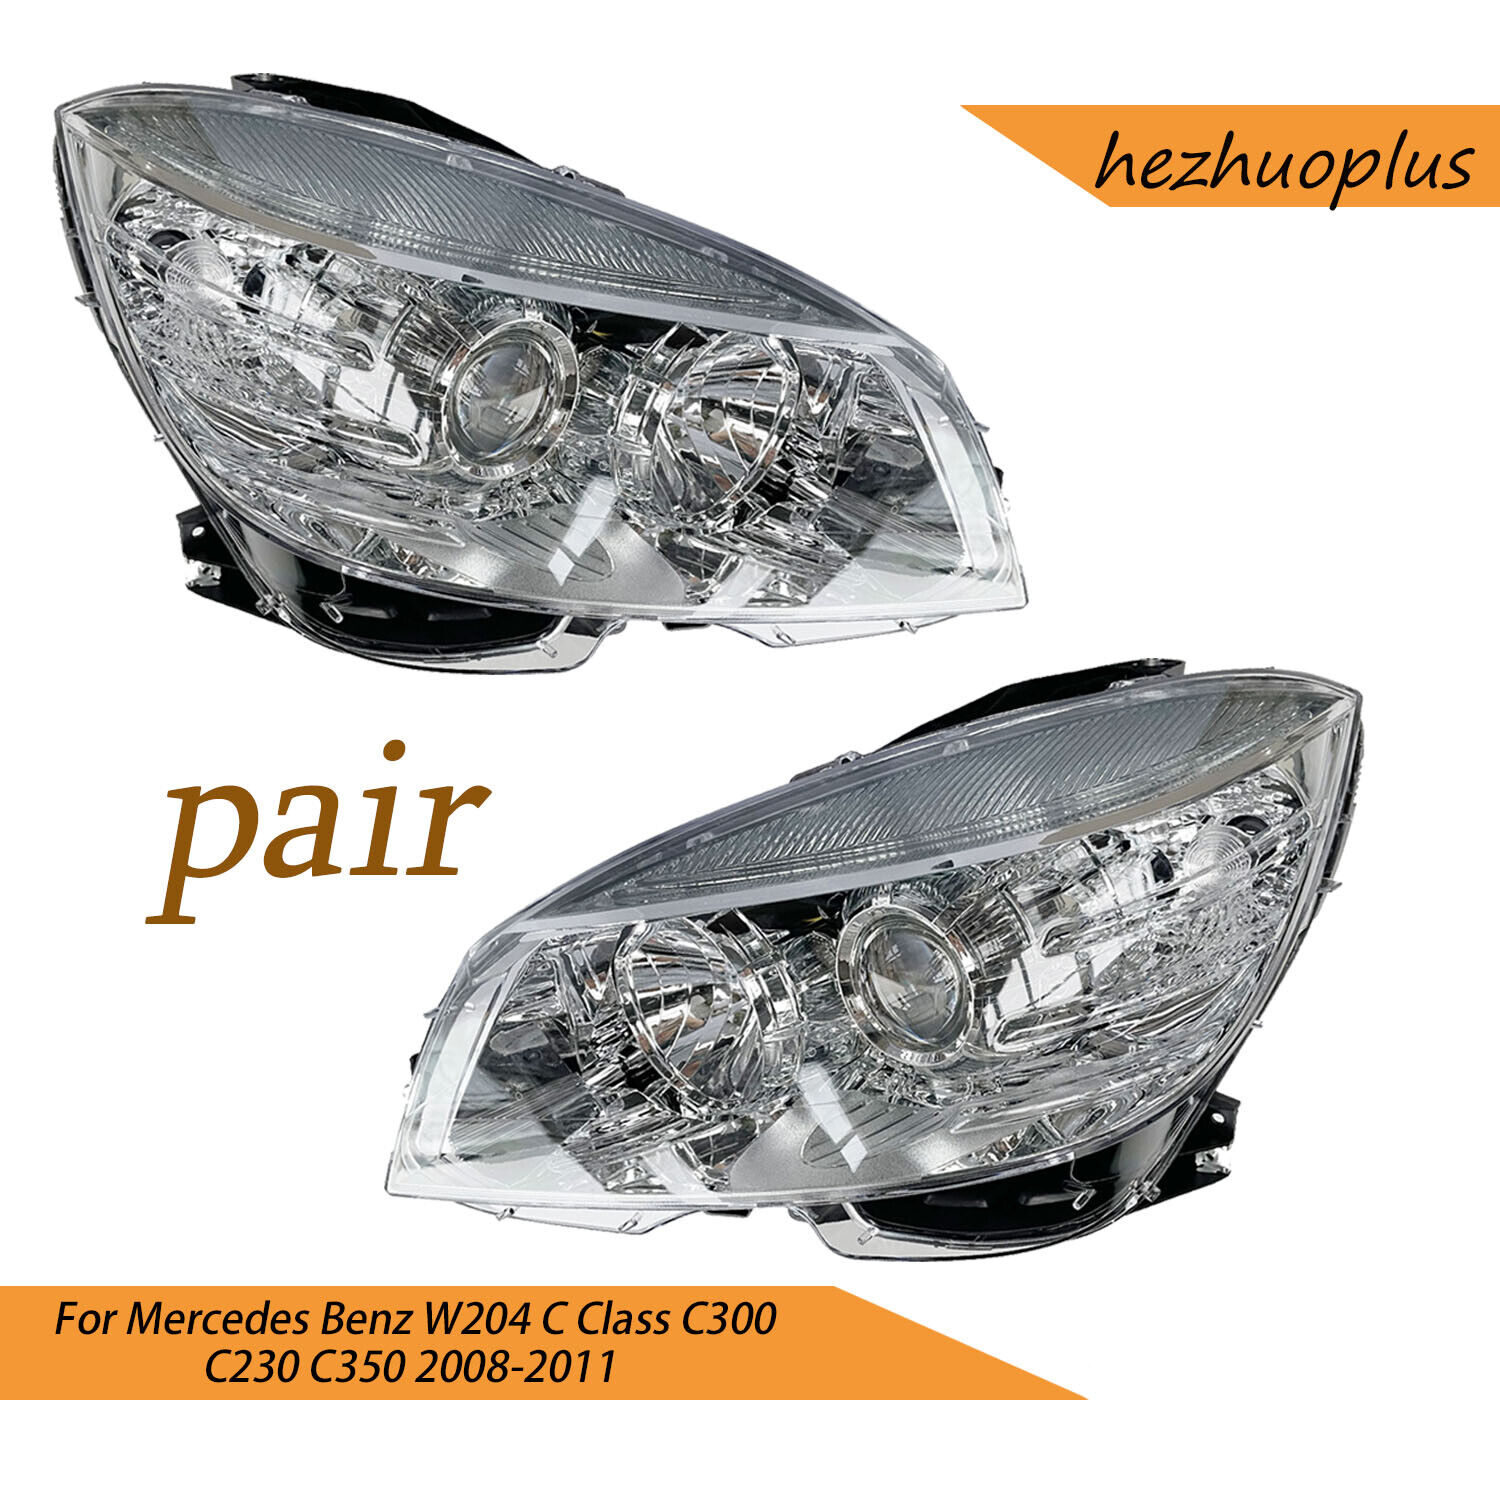 A Pair Halogen Headlight For Mercedes Benz W204 C Class C300 C230 C350 2008-2011